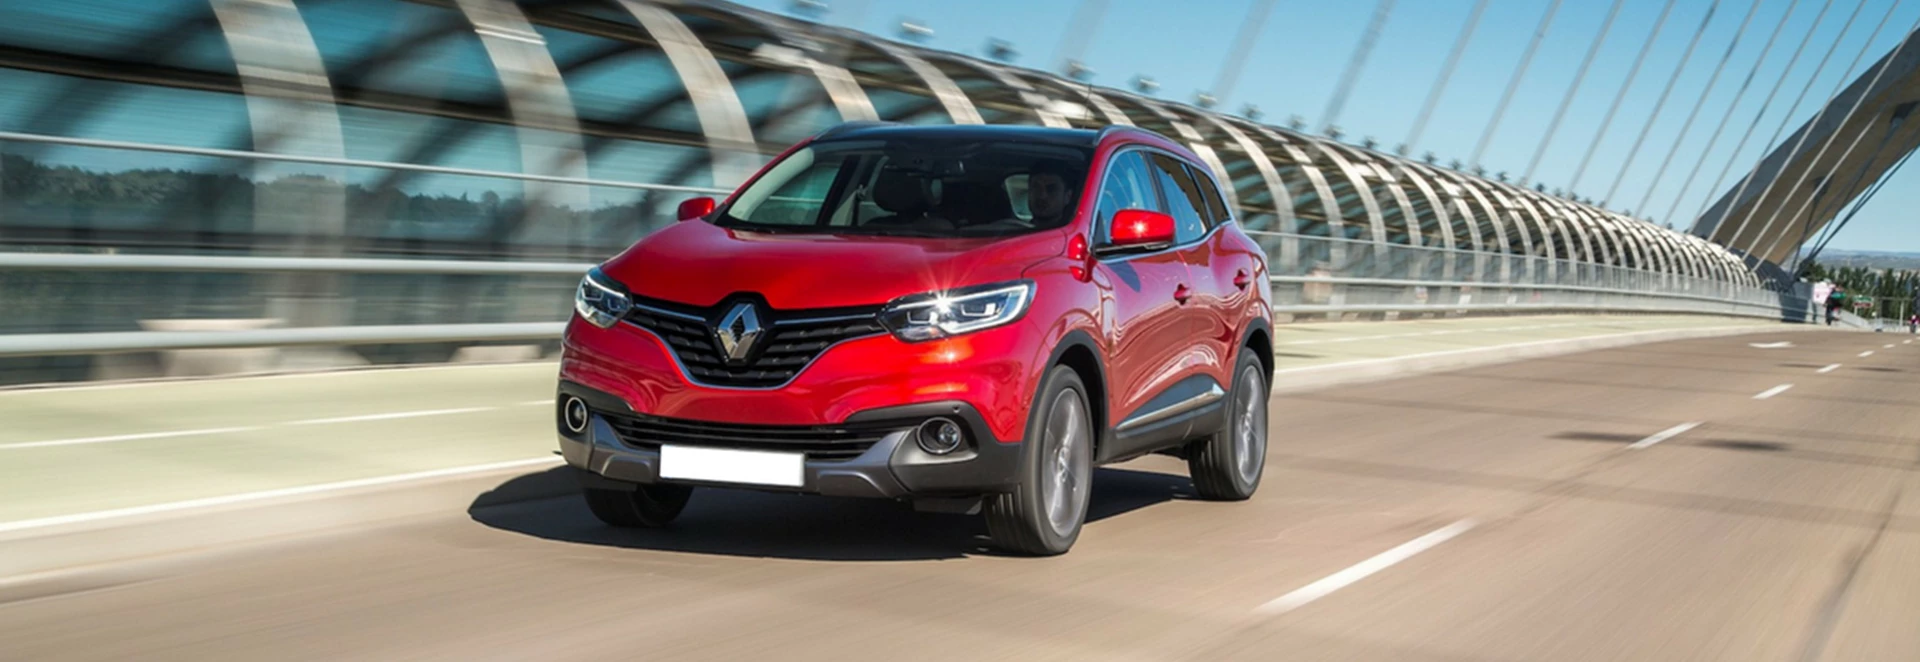 2018 Renault Kadjar review